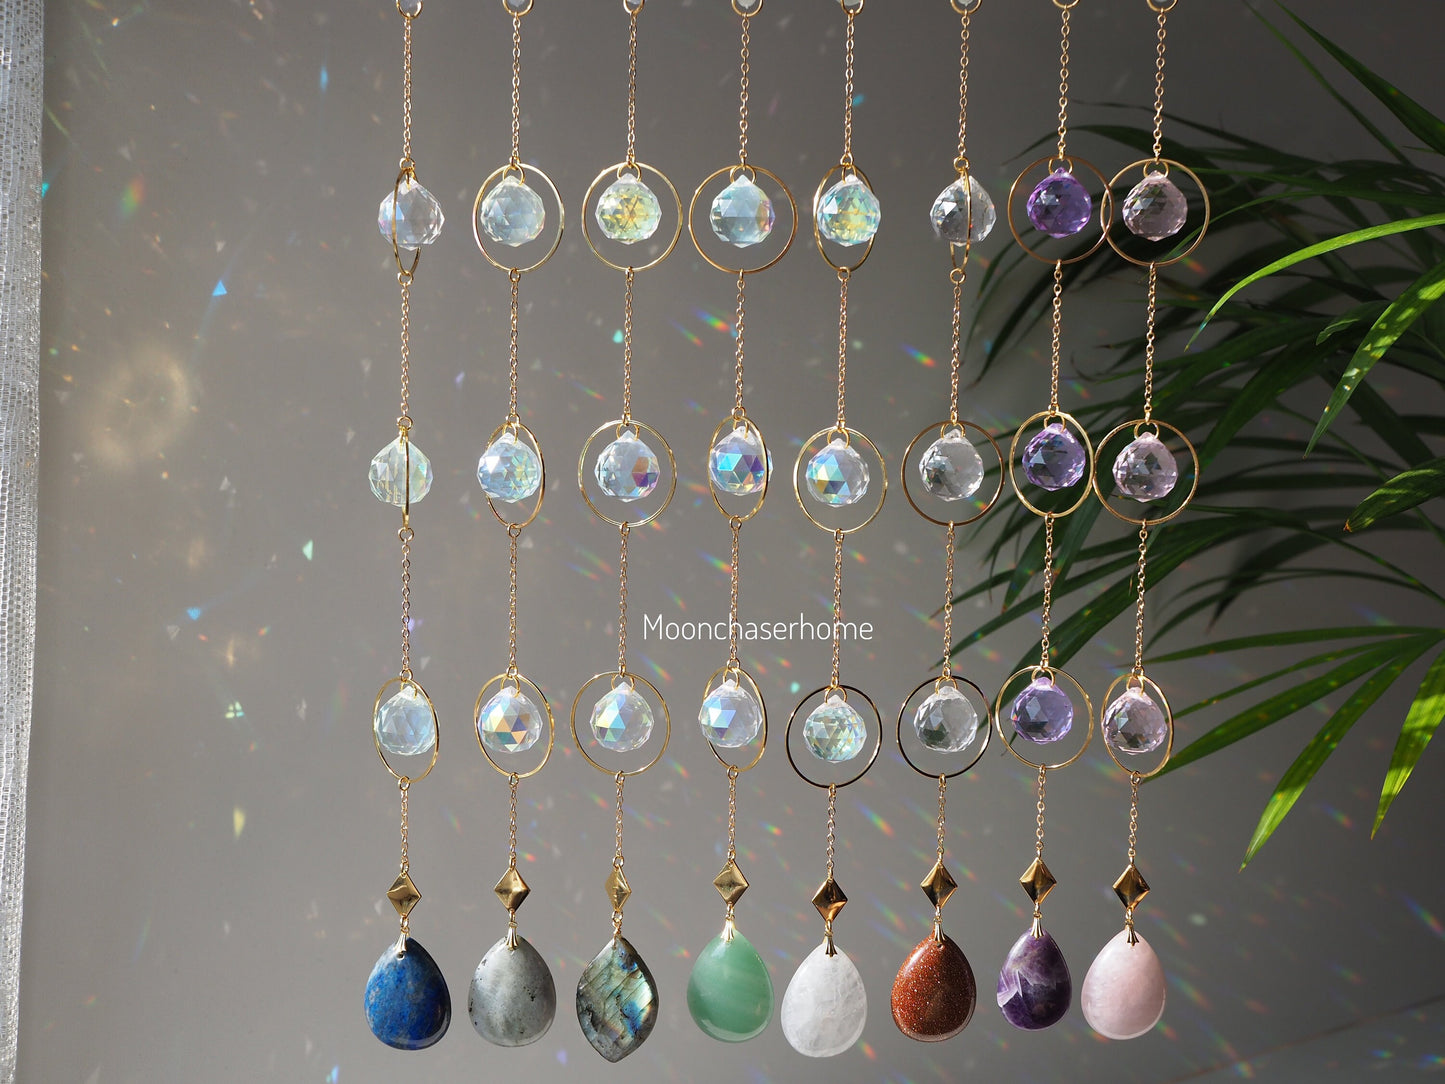 Kofun suncatcher, natural crytsal and aurora borealis crystals, Birthday gift, rainbow prism, gift for her, home decor, housewarming gifts